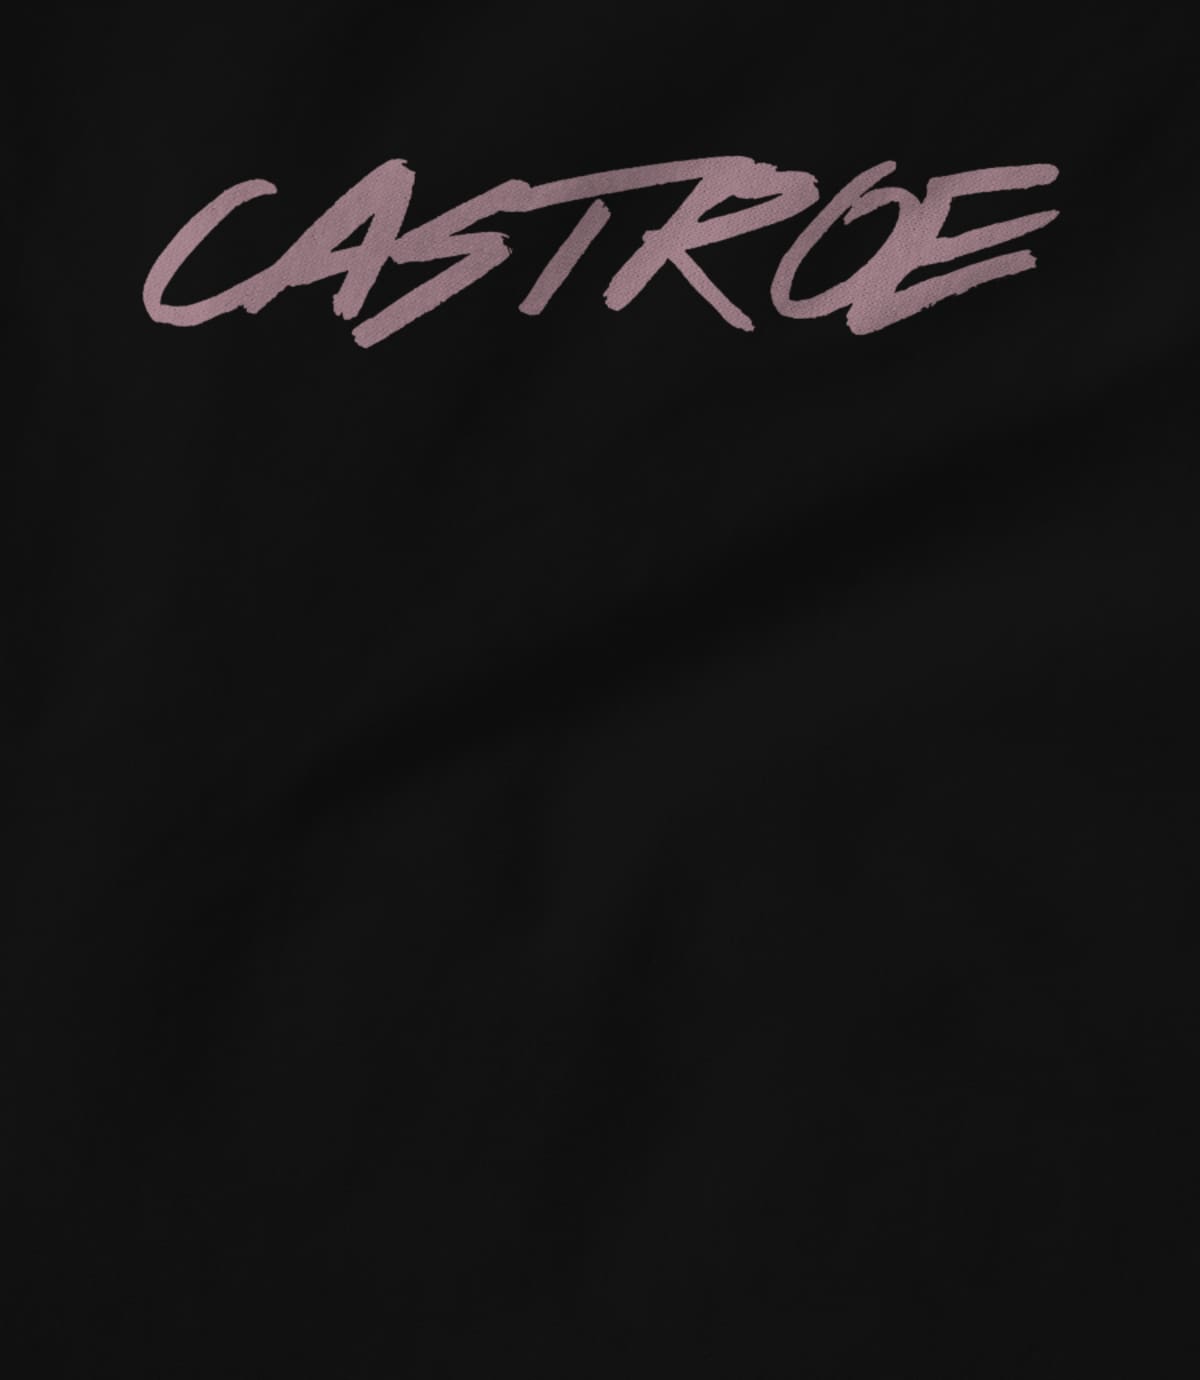 Castroe castroe logo 1549795073